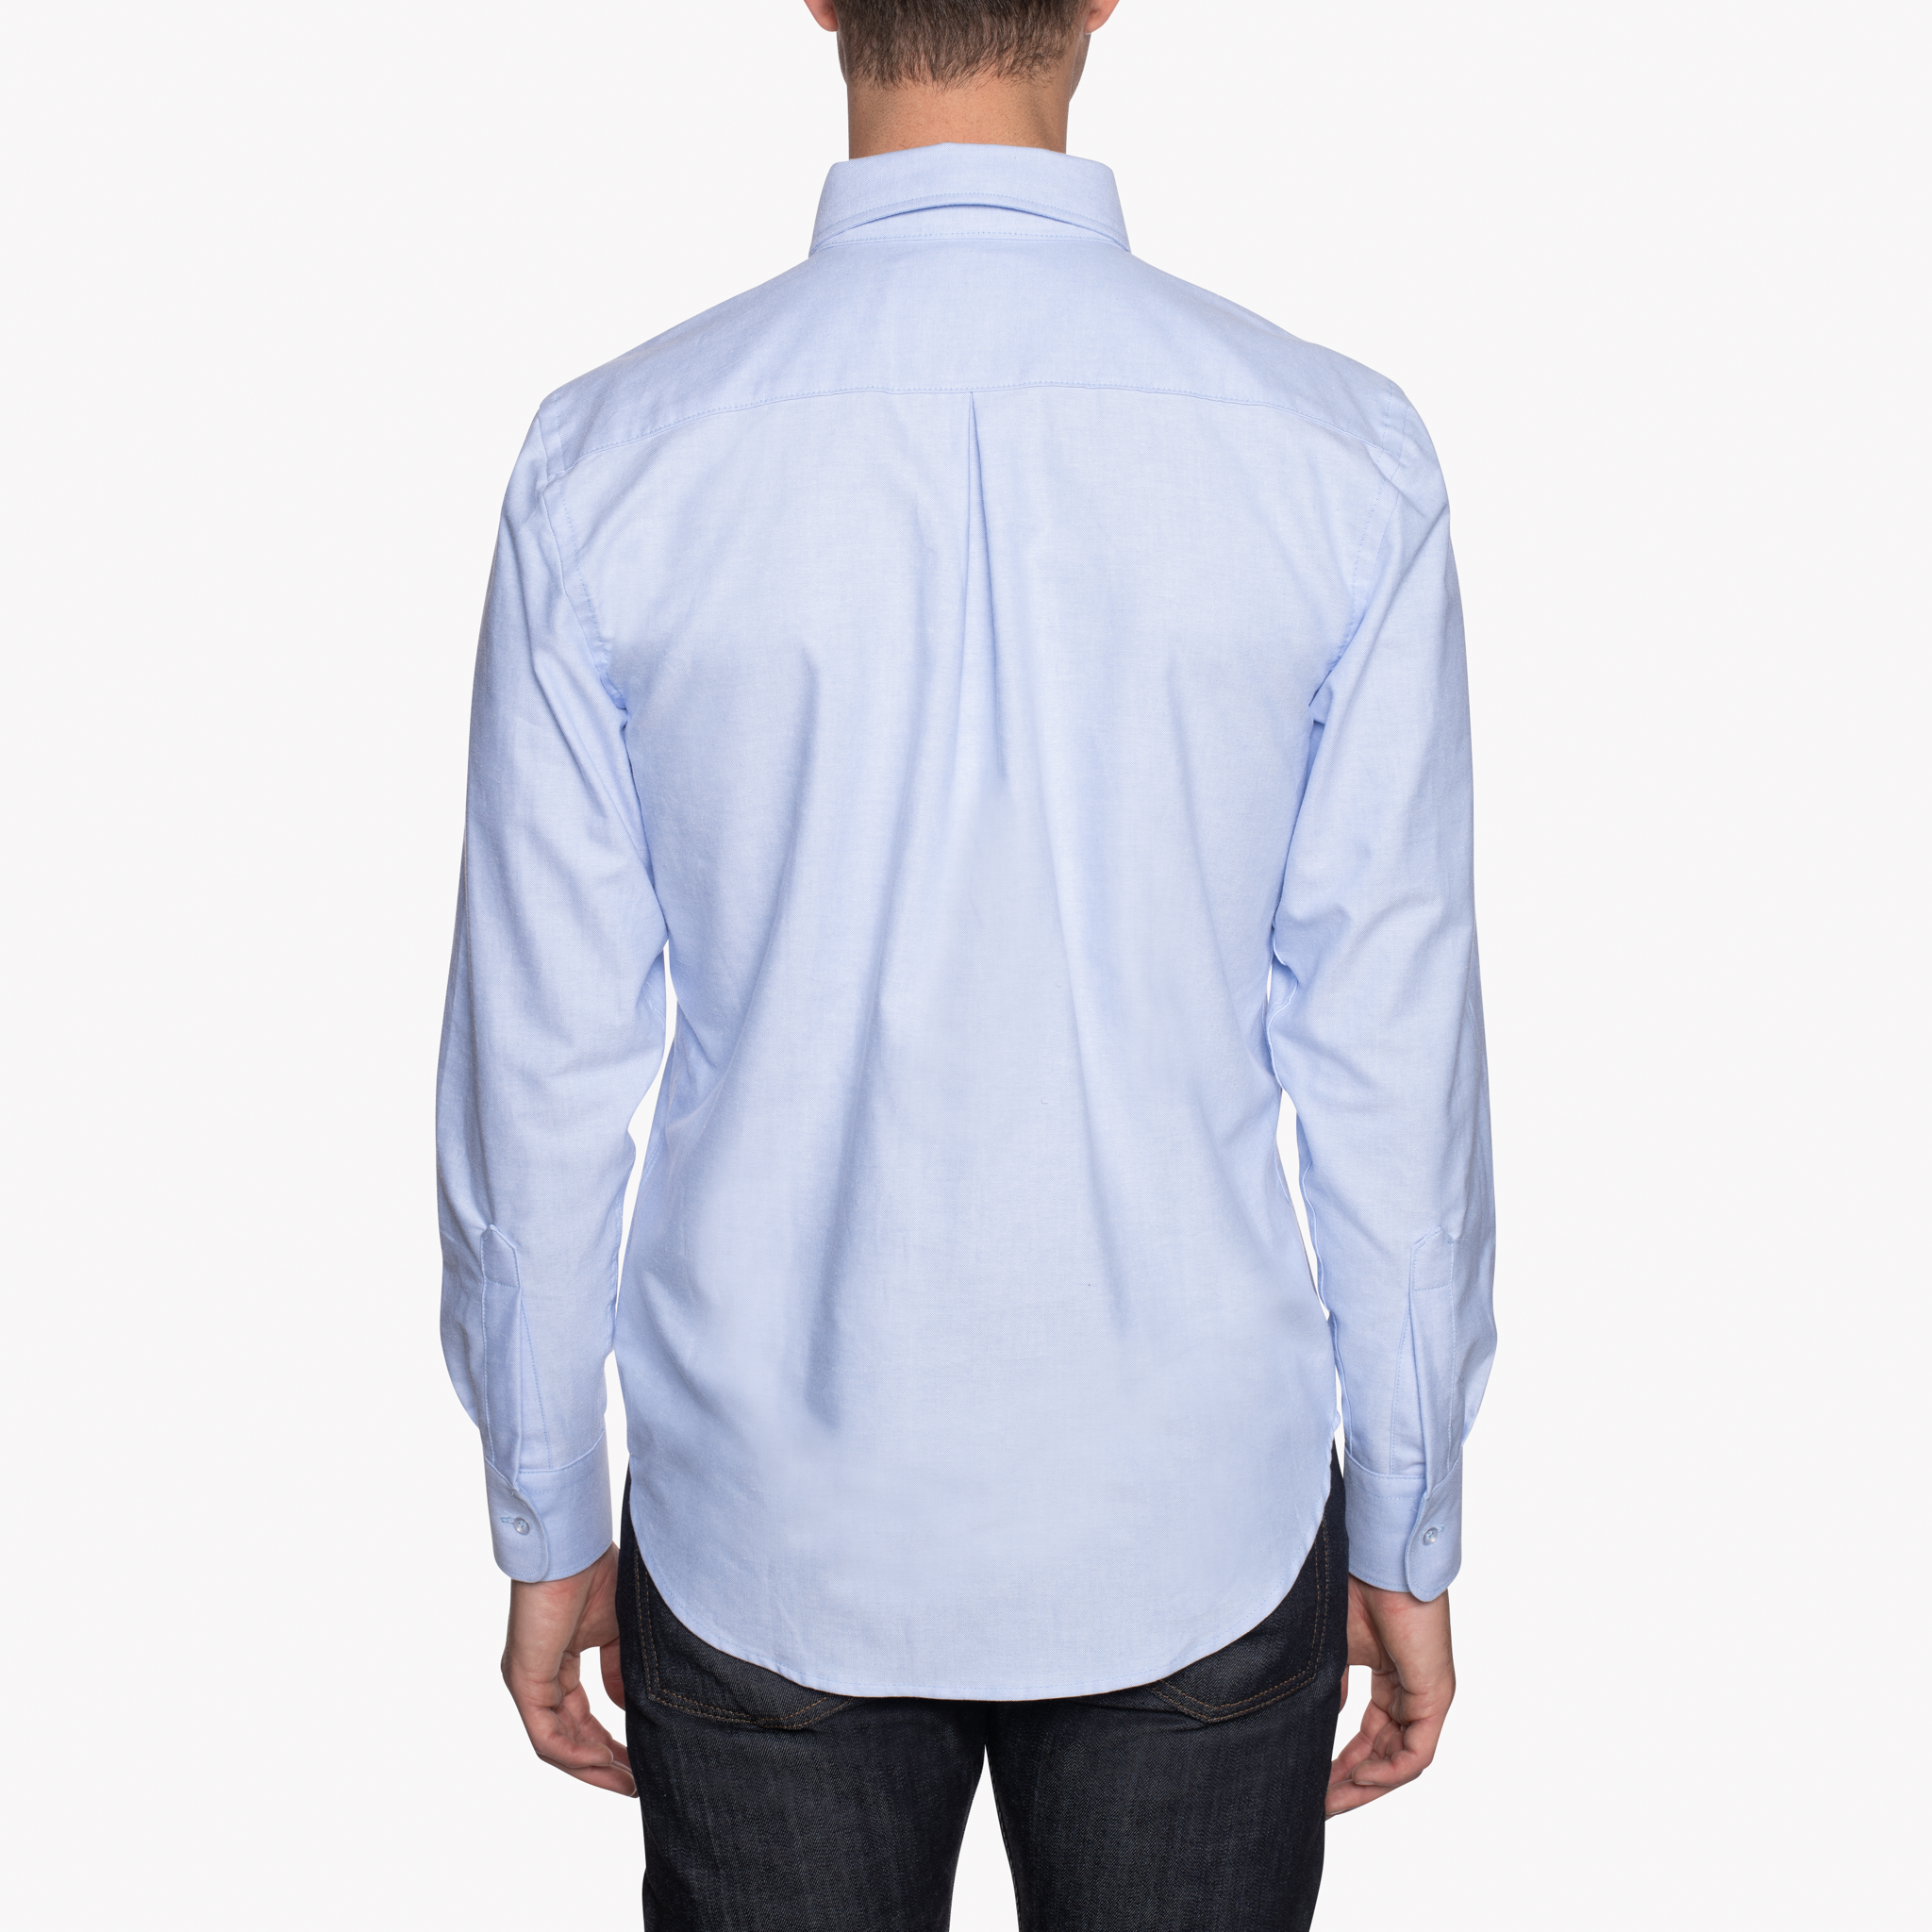  Easy Shirt - Cotton Oxford - Pale Blue - back 